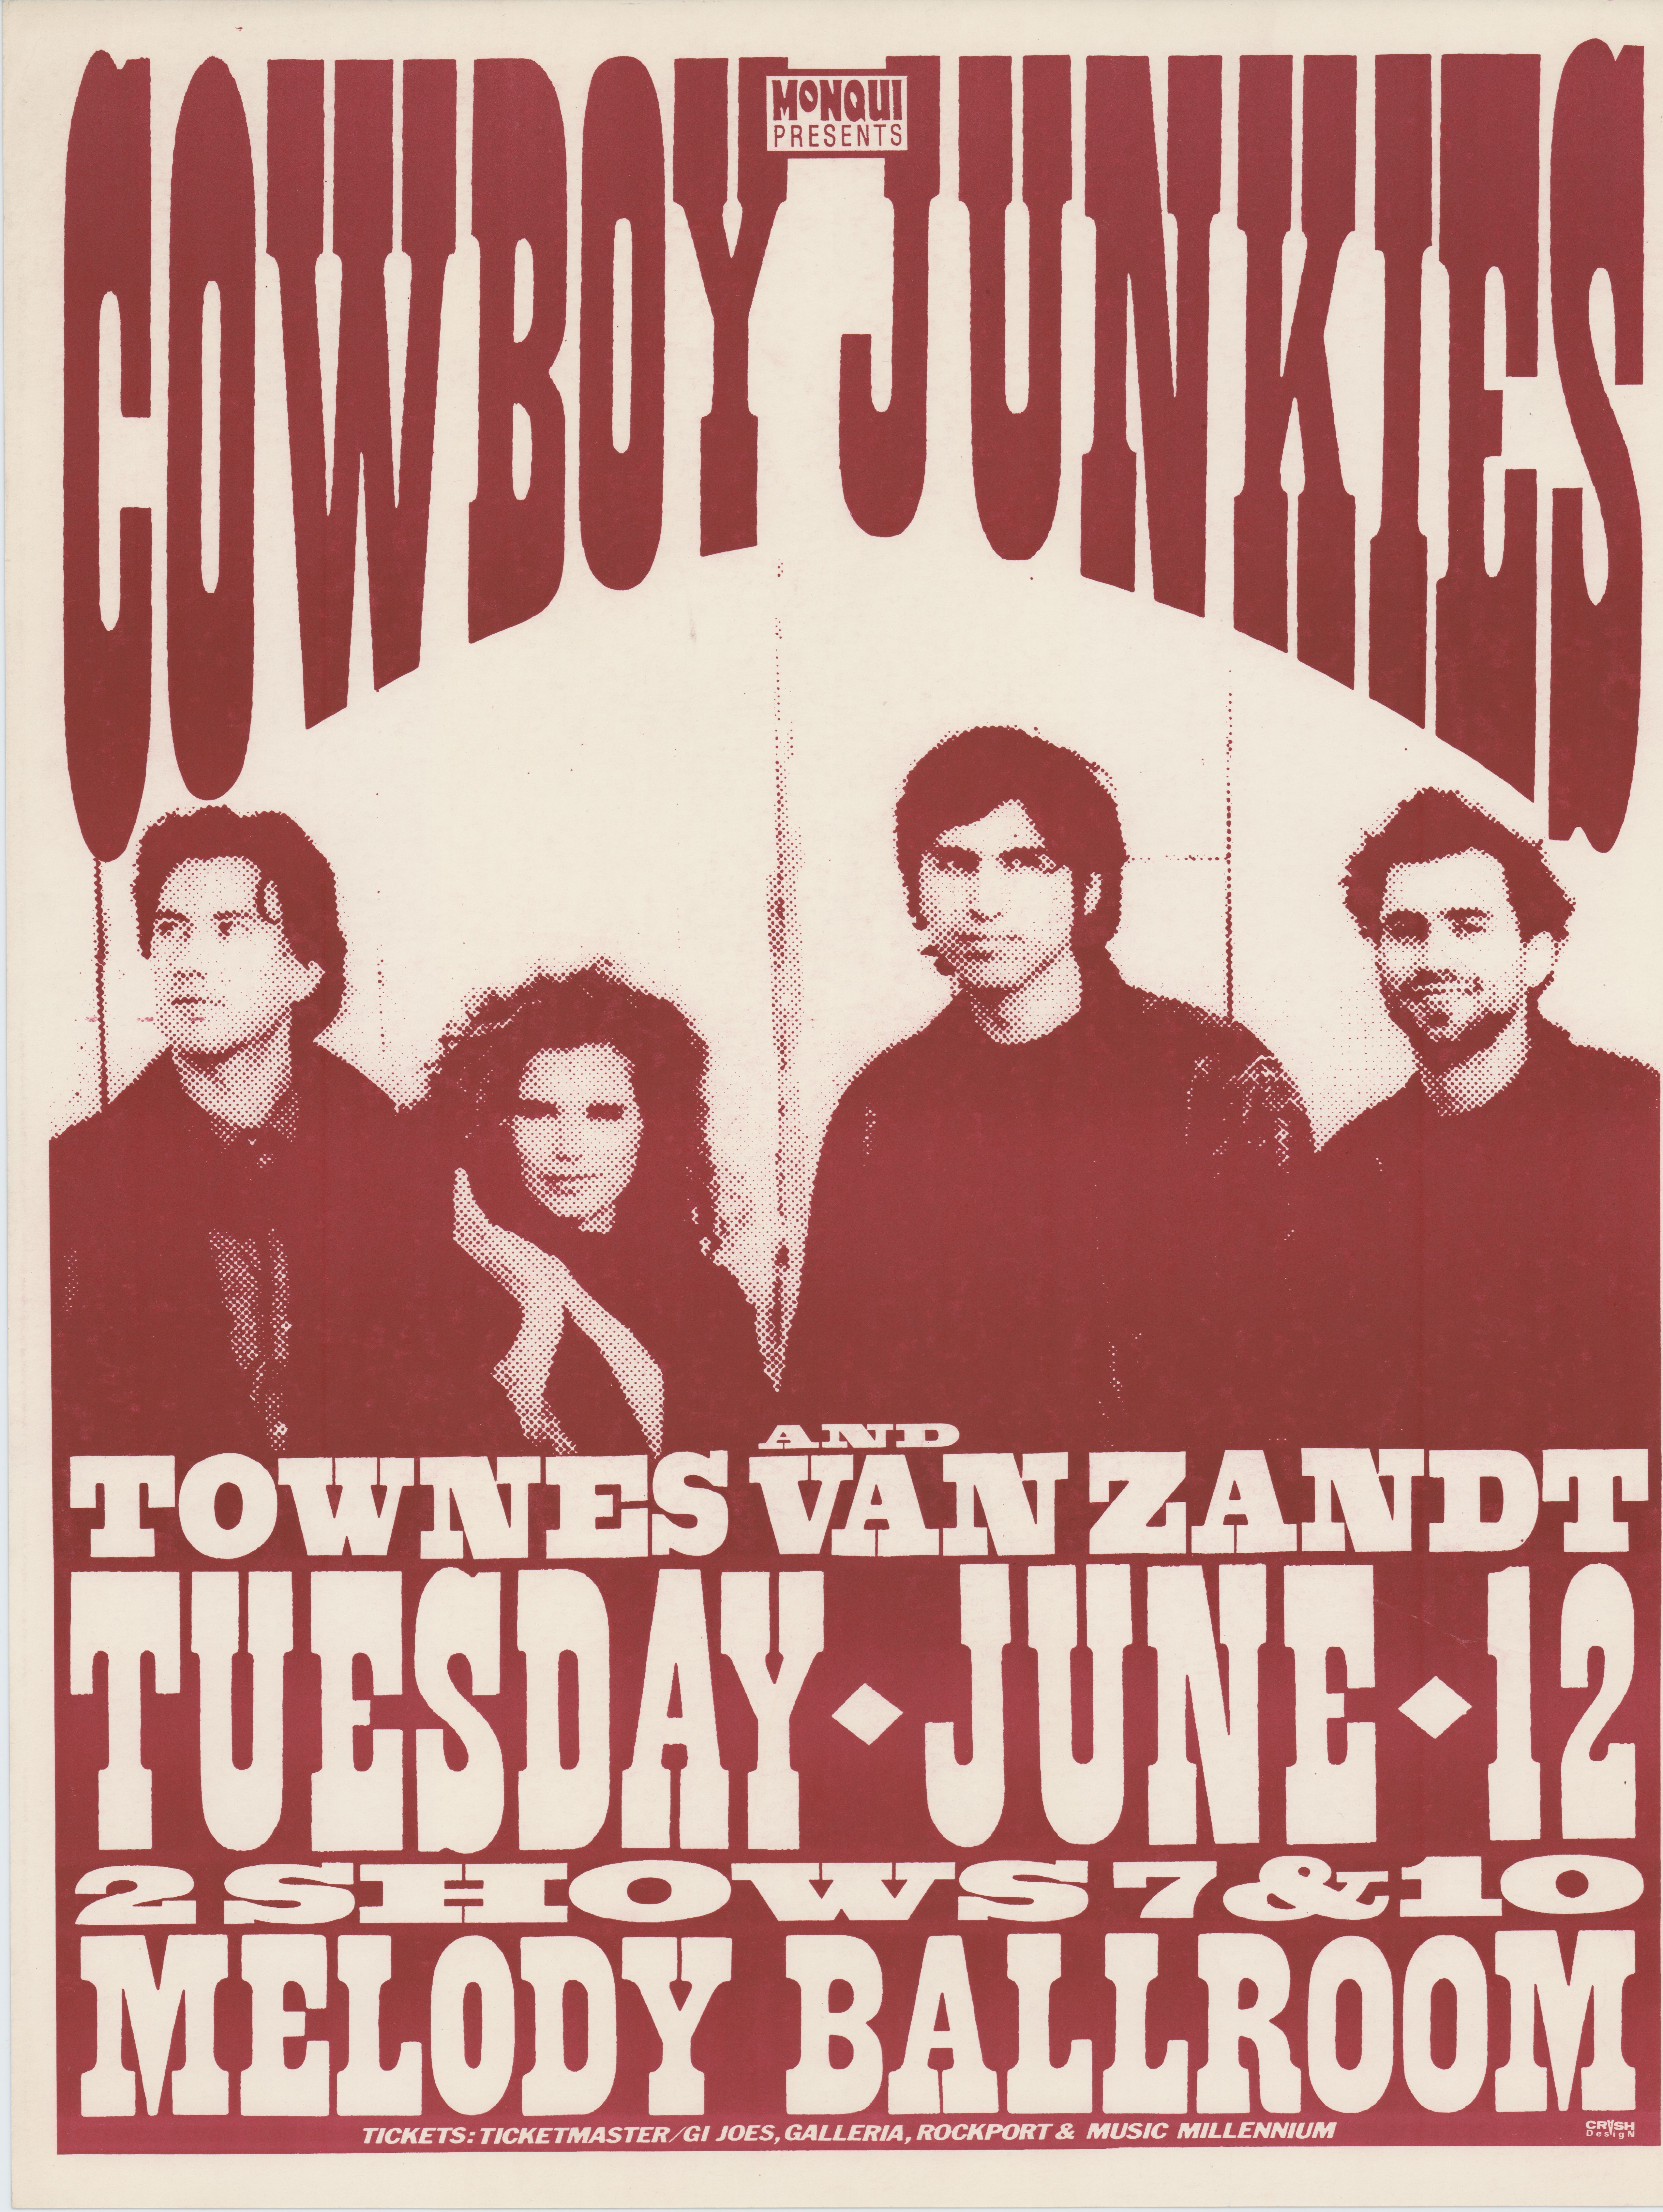 MXP-168.7 Cowboy Junkies 1990 Melody Ballroom  Jun 12 Concert Poster